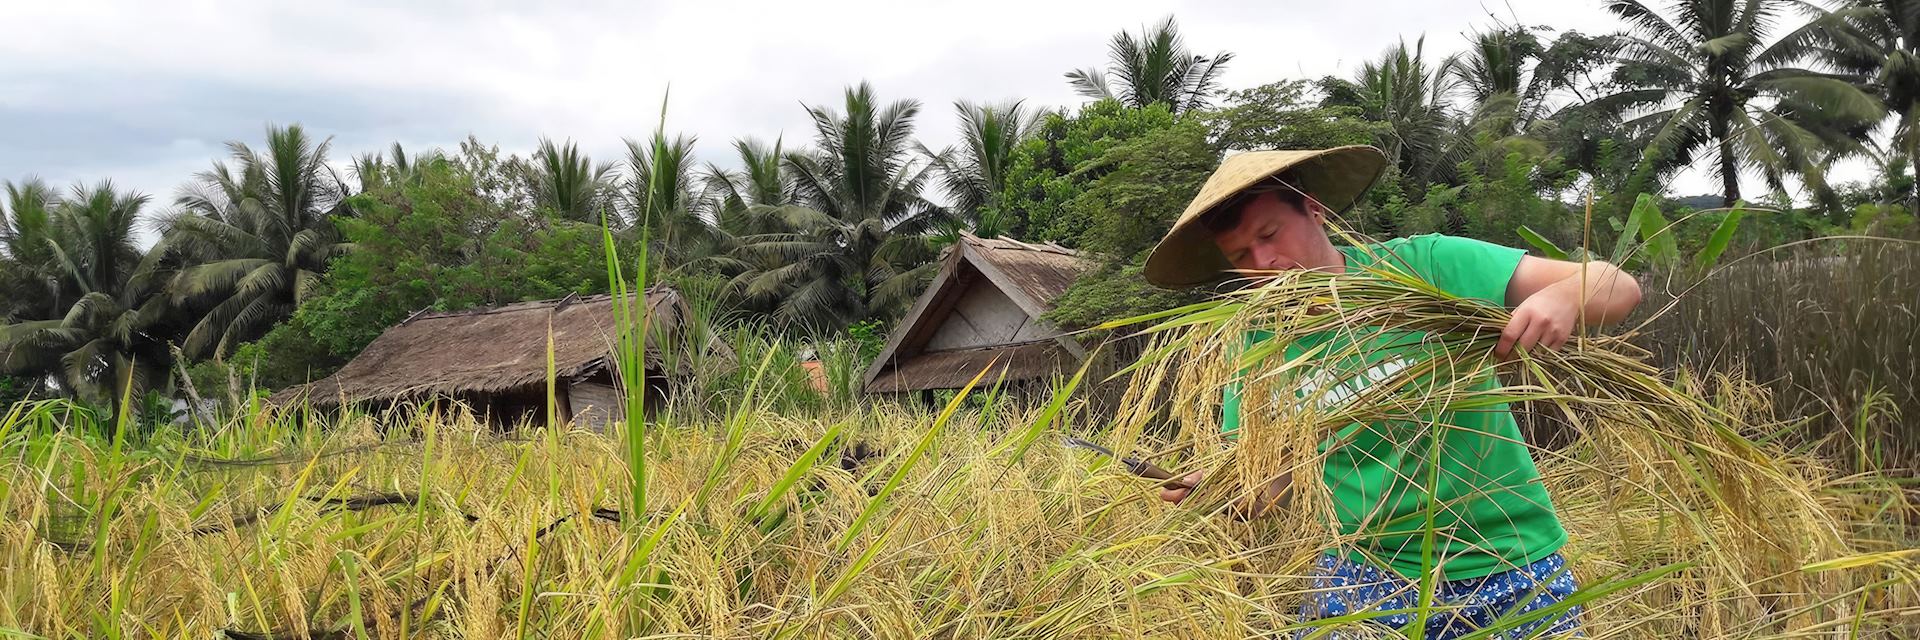 Ross harvesting rice, Vietnam